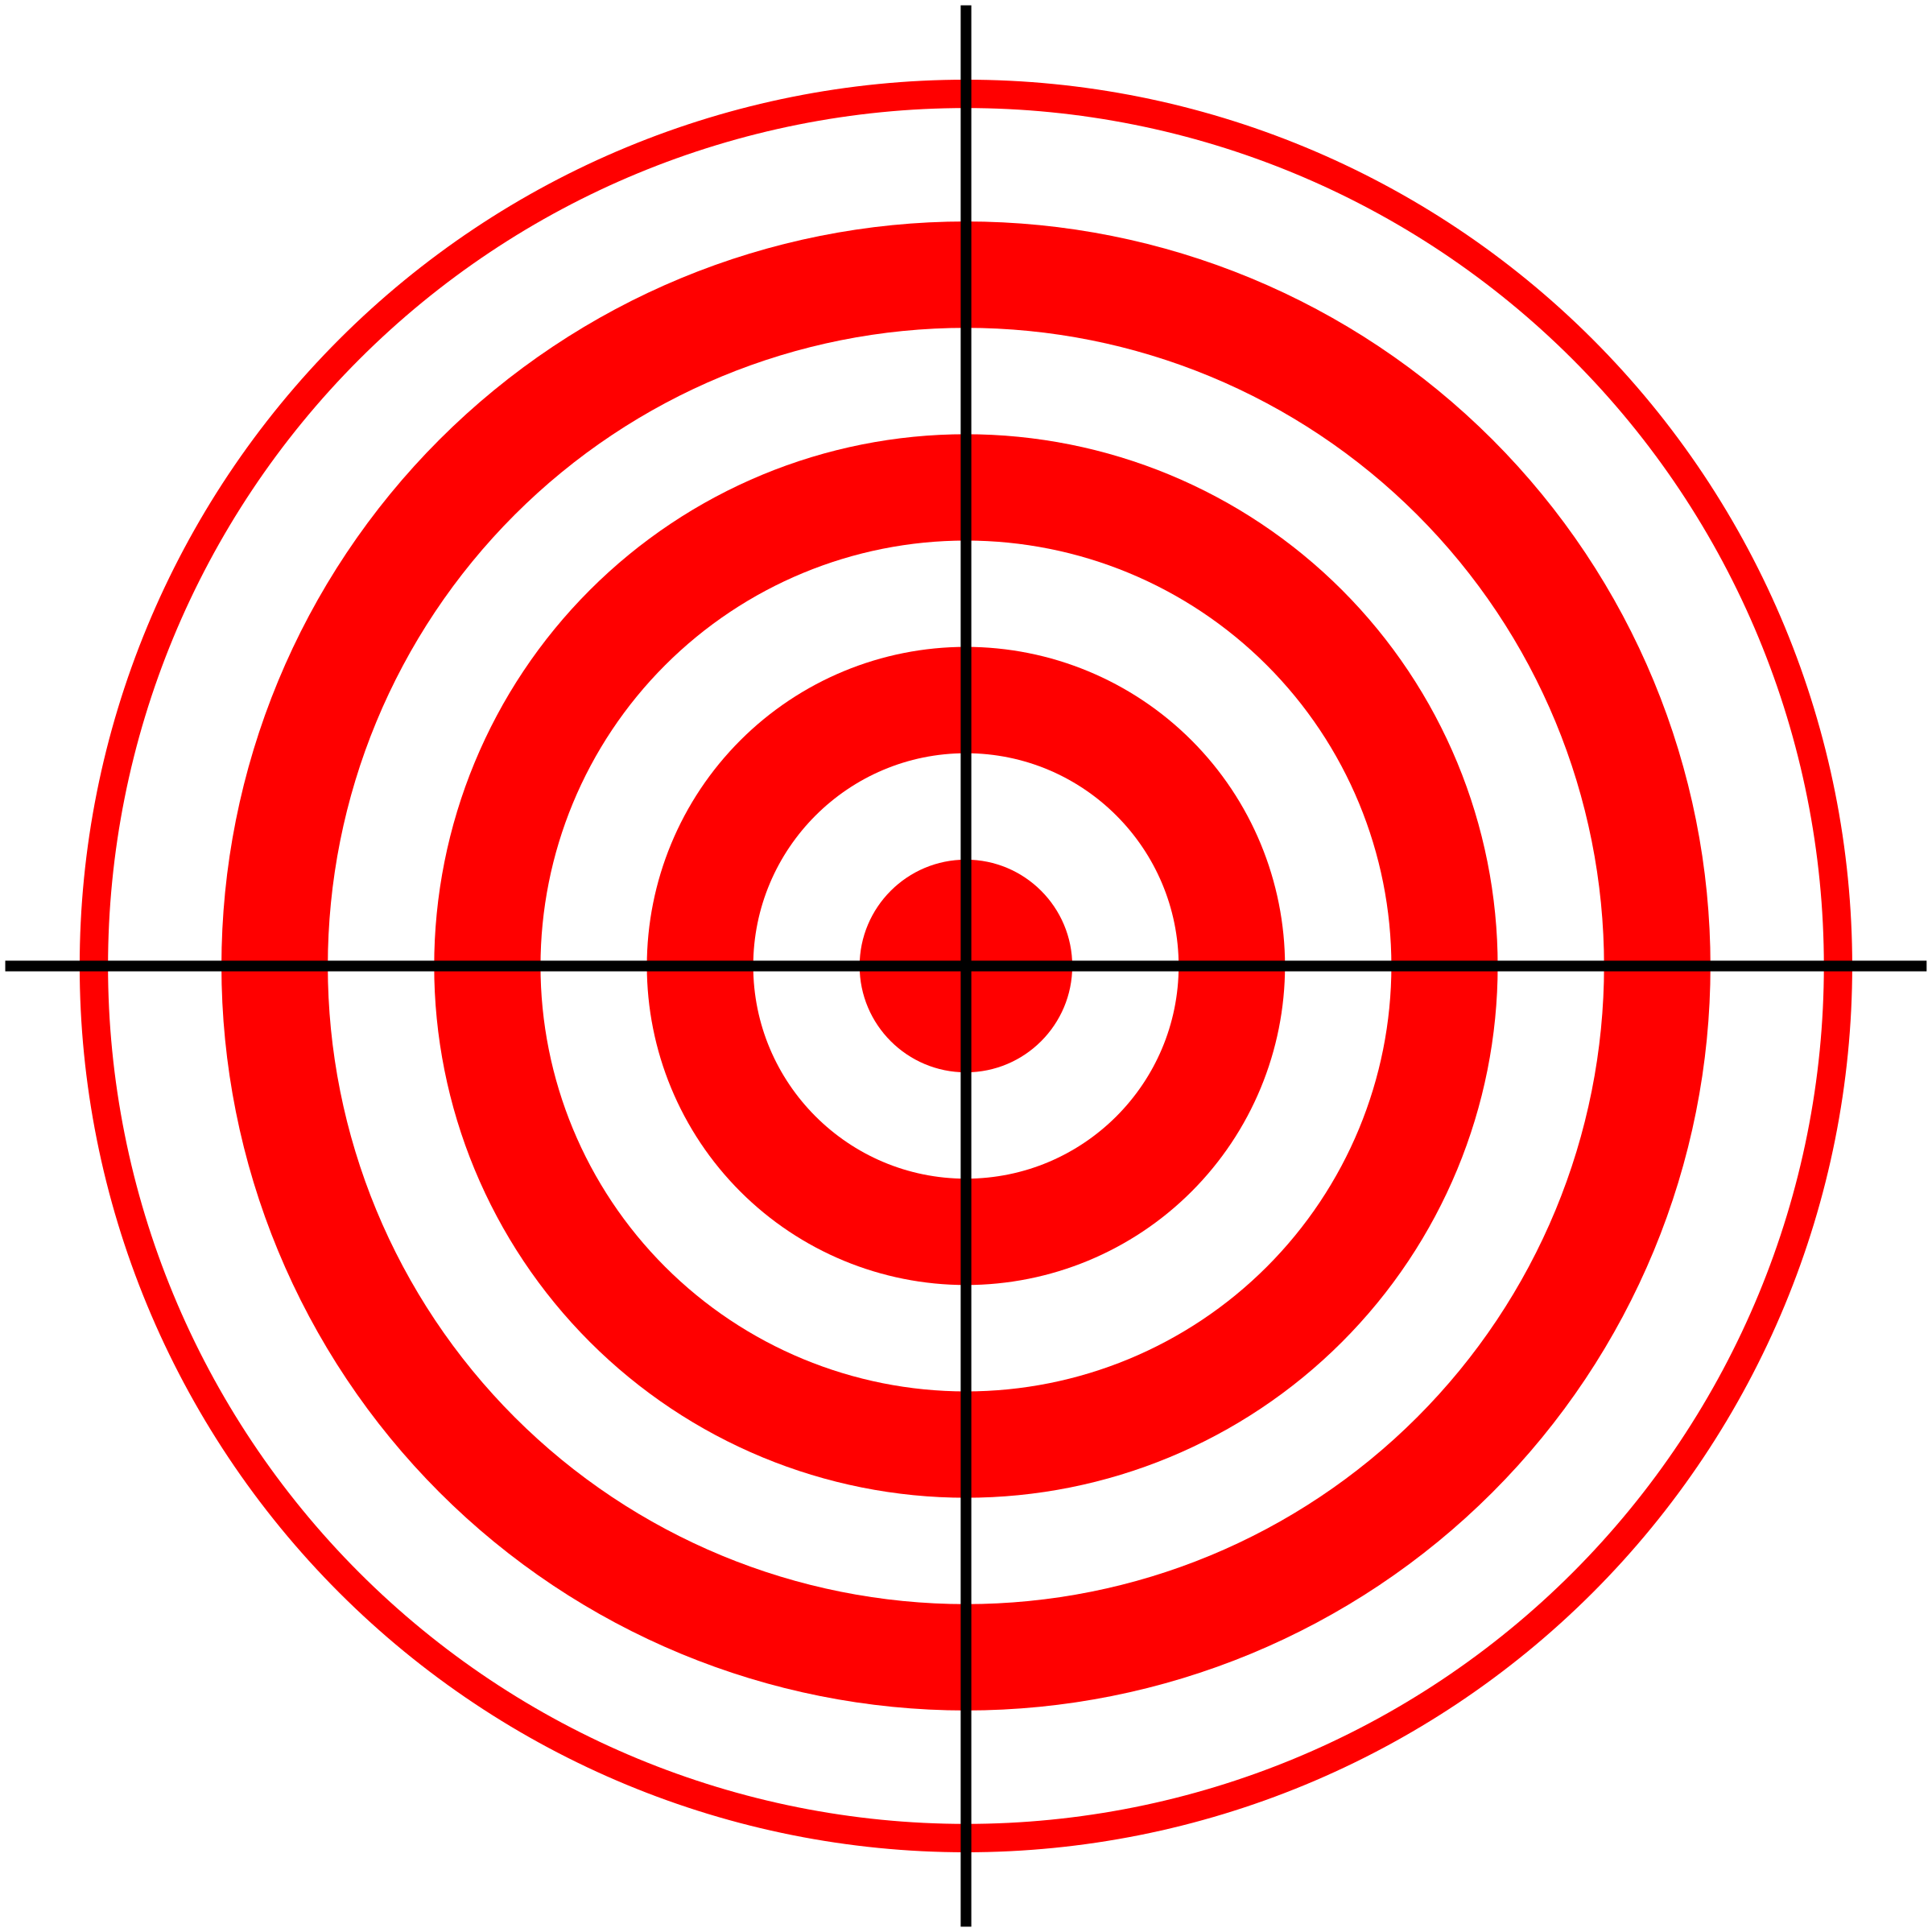 target logo clip art - photo #40